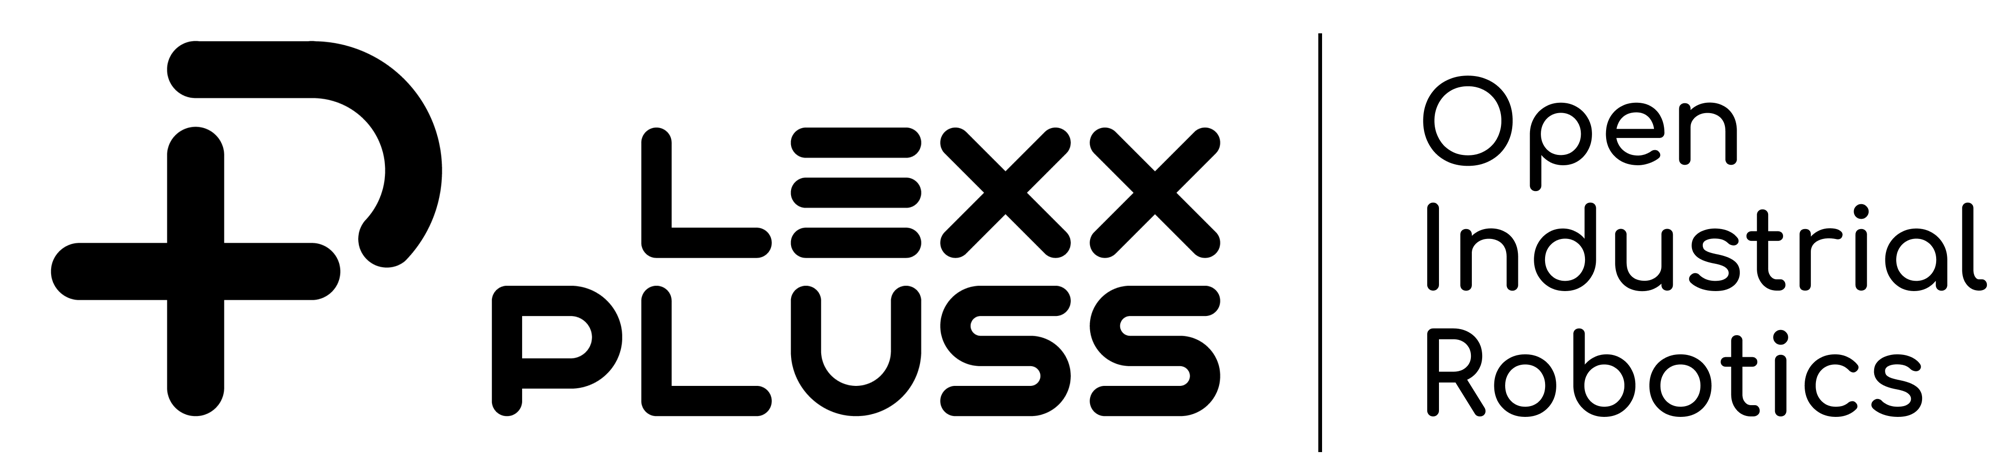 LexxPluss Open Industrial Robotics